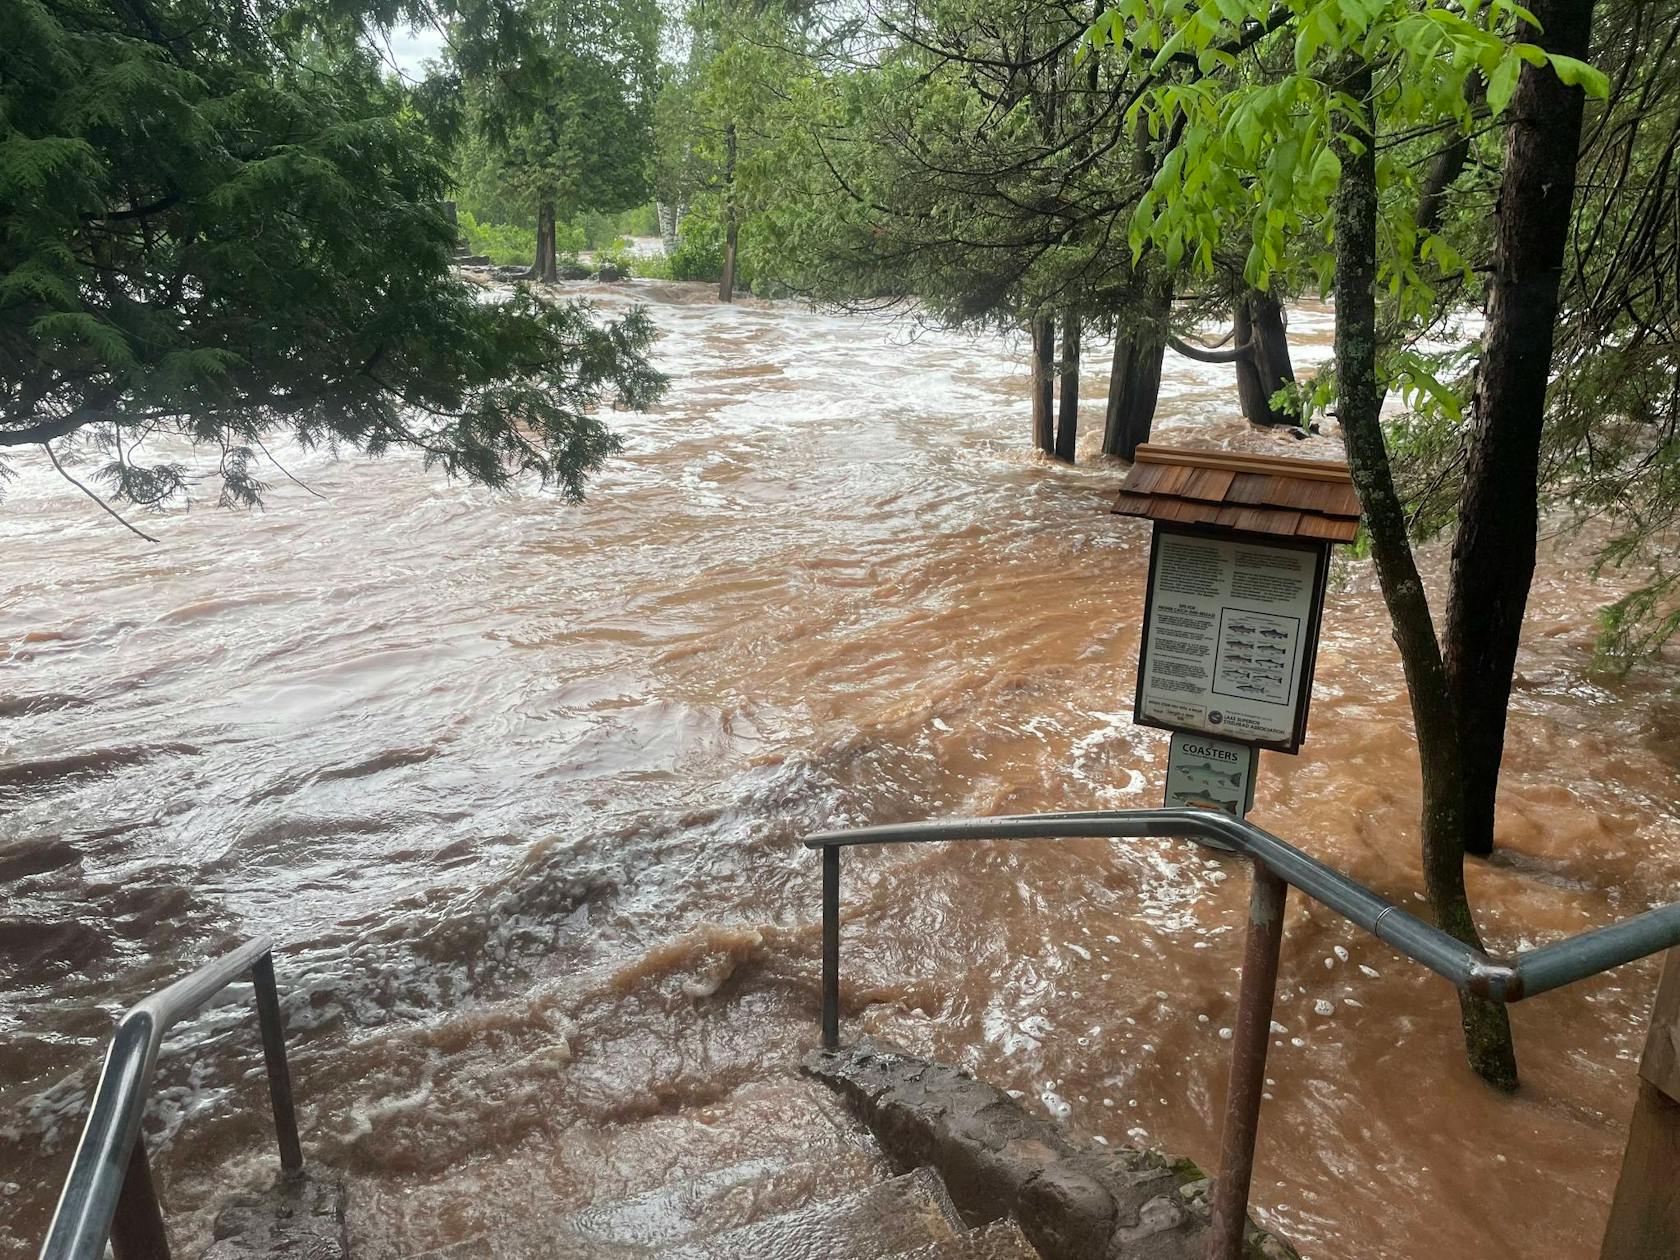 Minnesota state parks took major weather, flooding hits, too